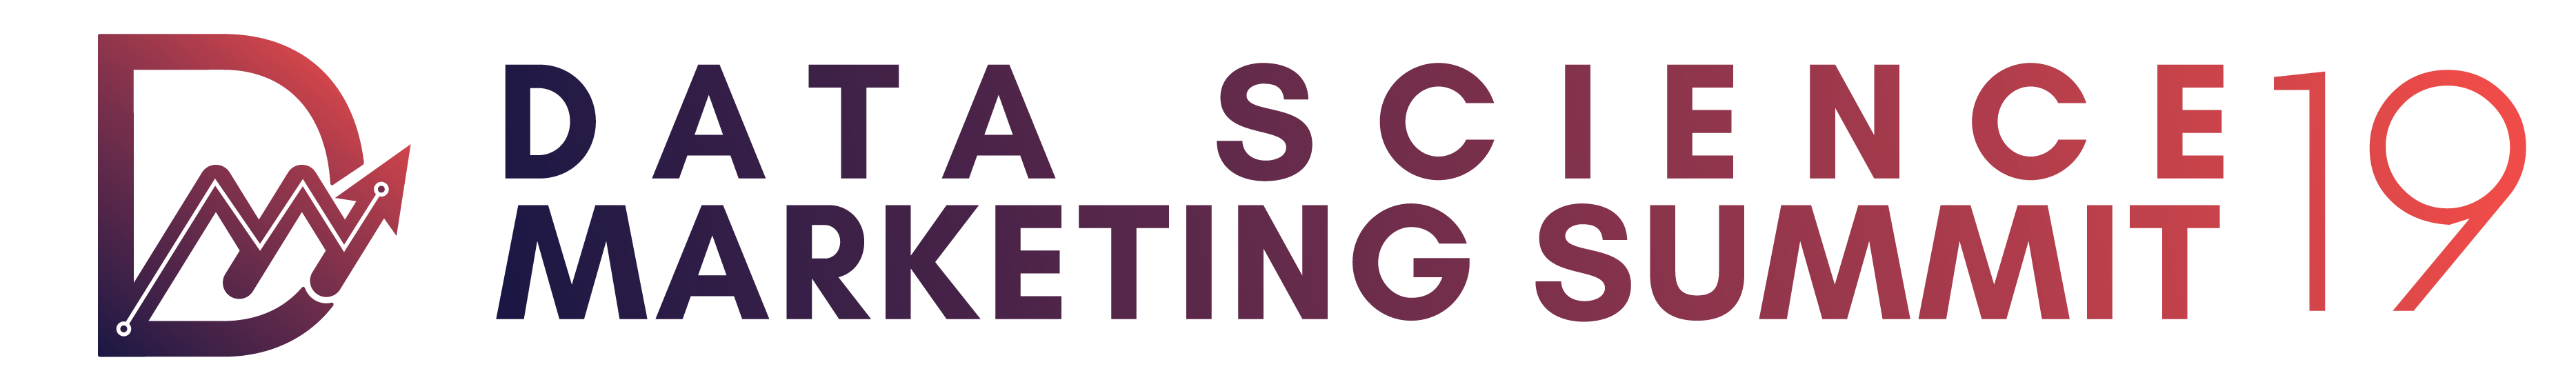 Data Science Marketing Summit 19 logo